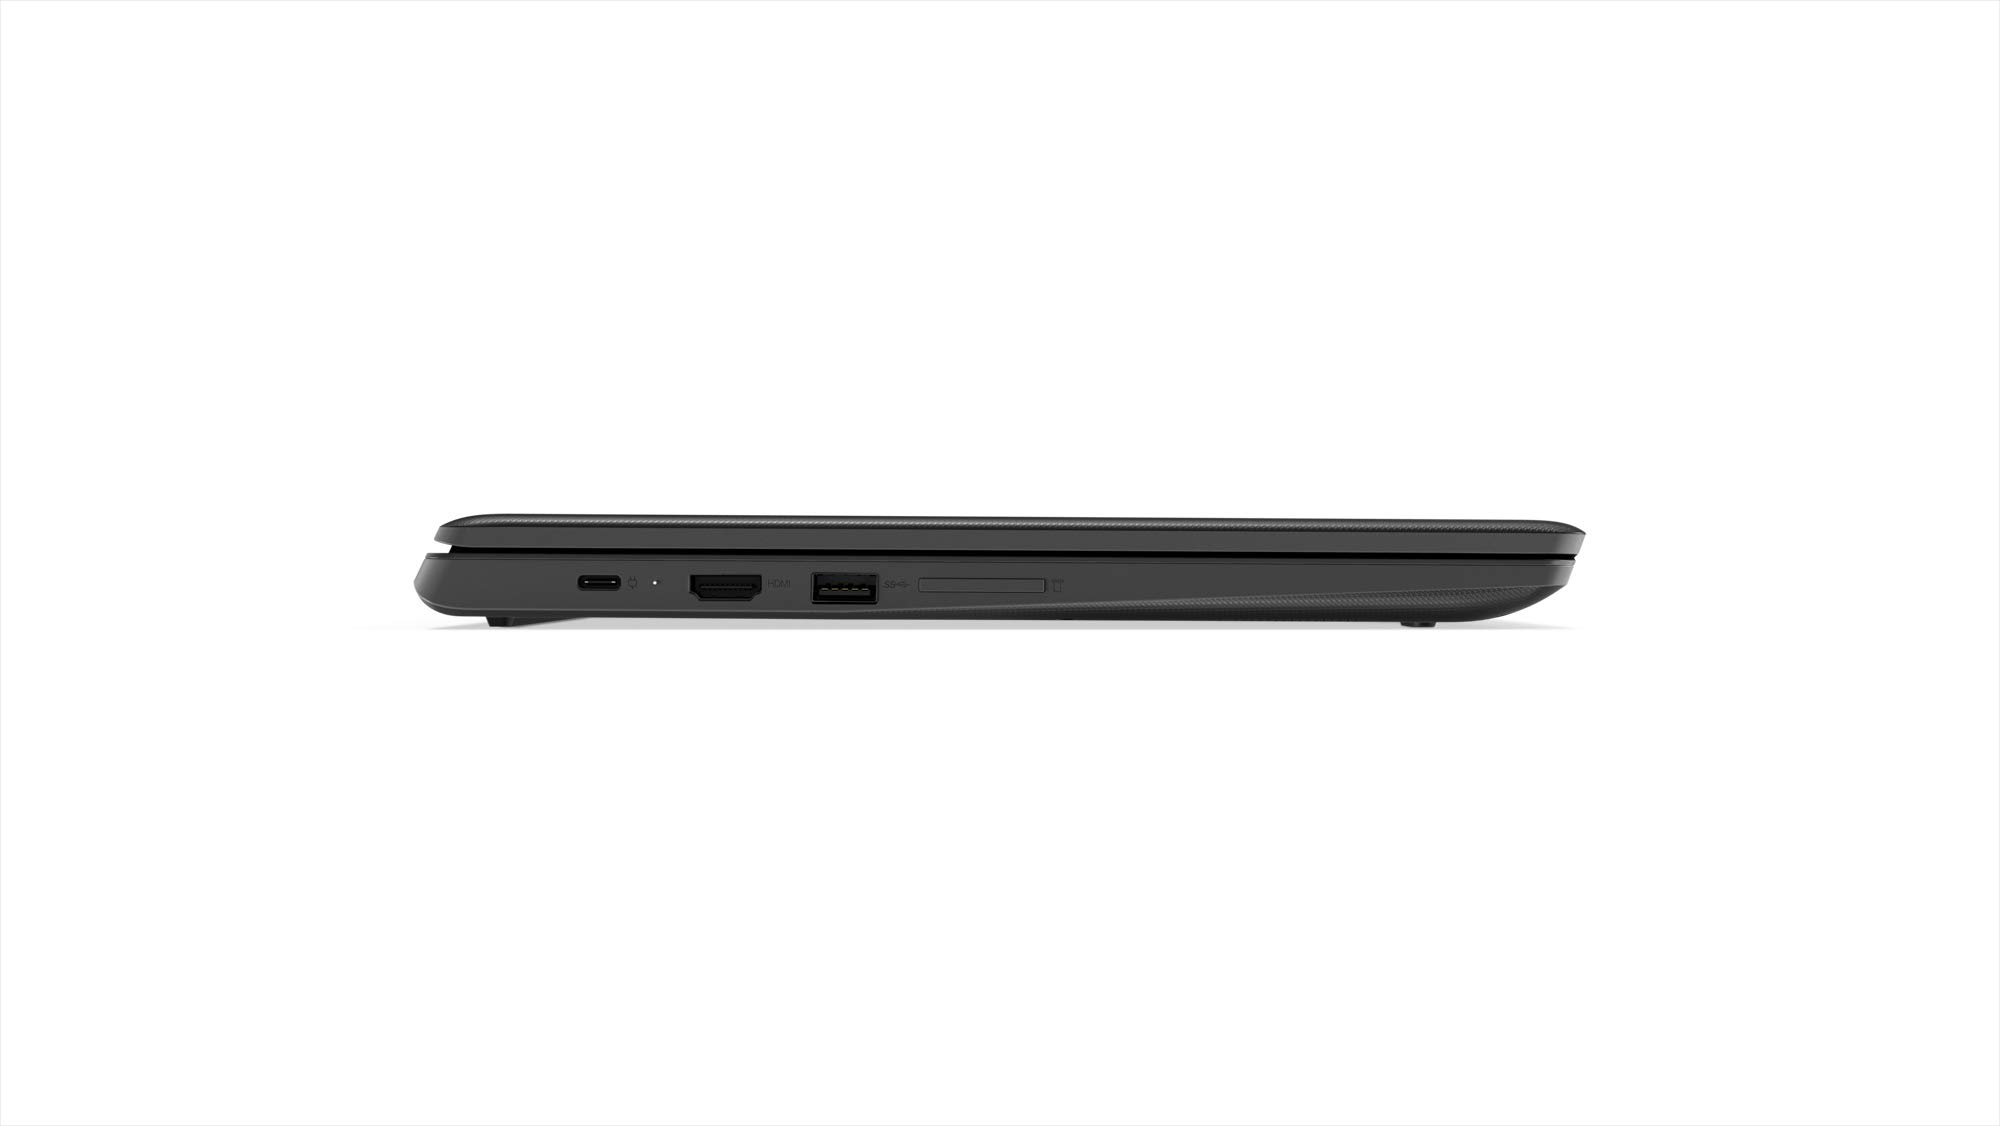 Lenovo Chromebook S330 Laptop, 14-Inch FHD Display, MediaTek MT8173C, 4GB RAM, 64GB Storage, Chrome OS